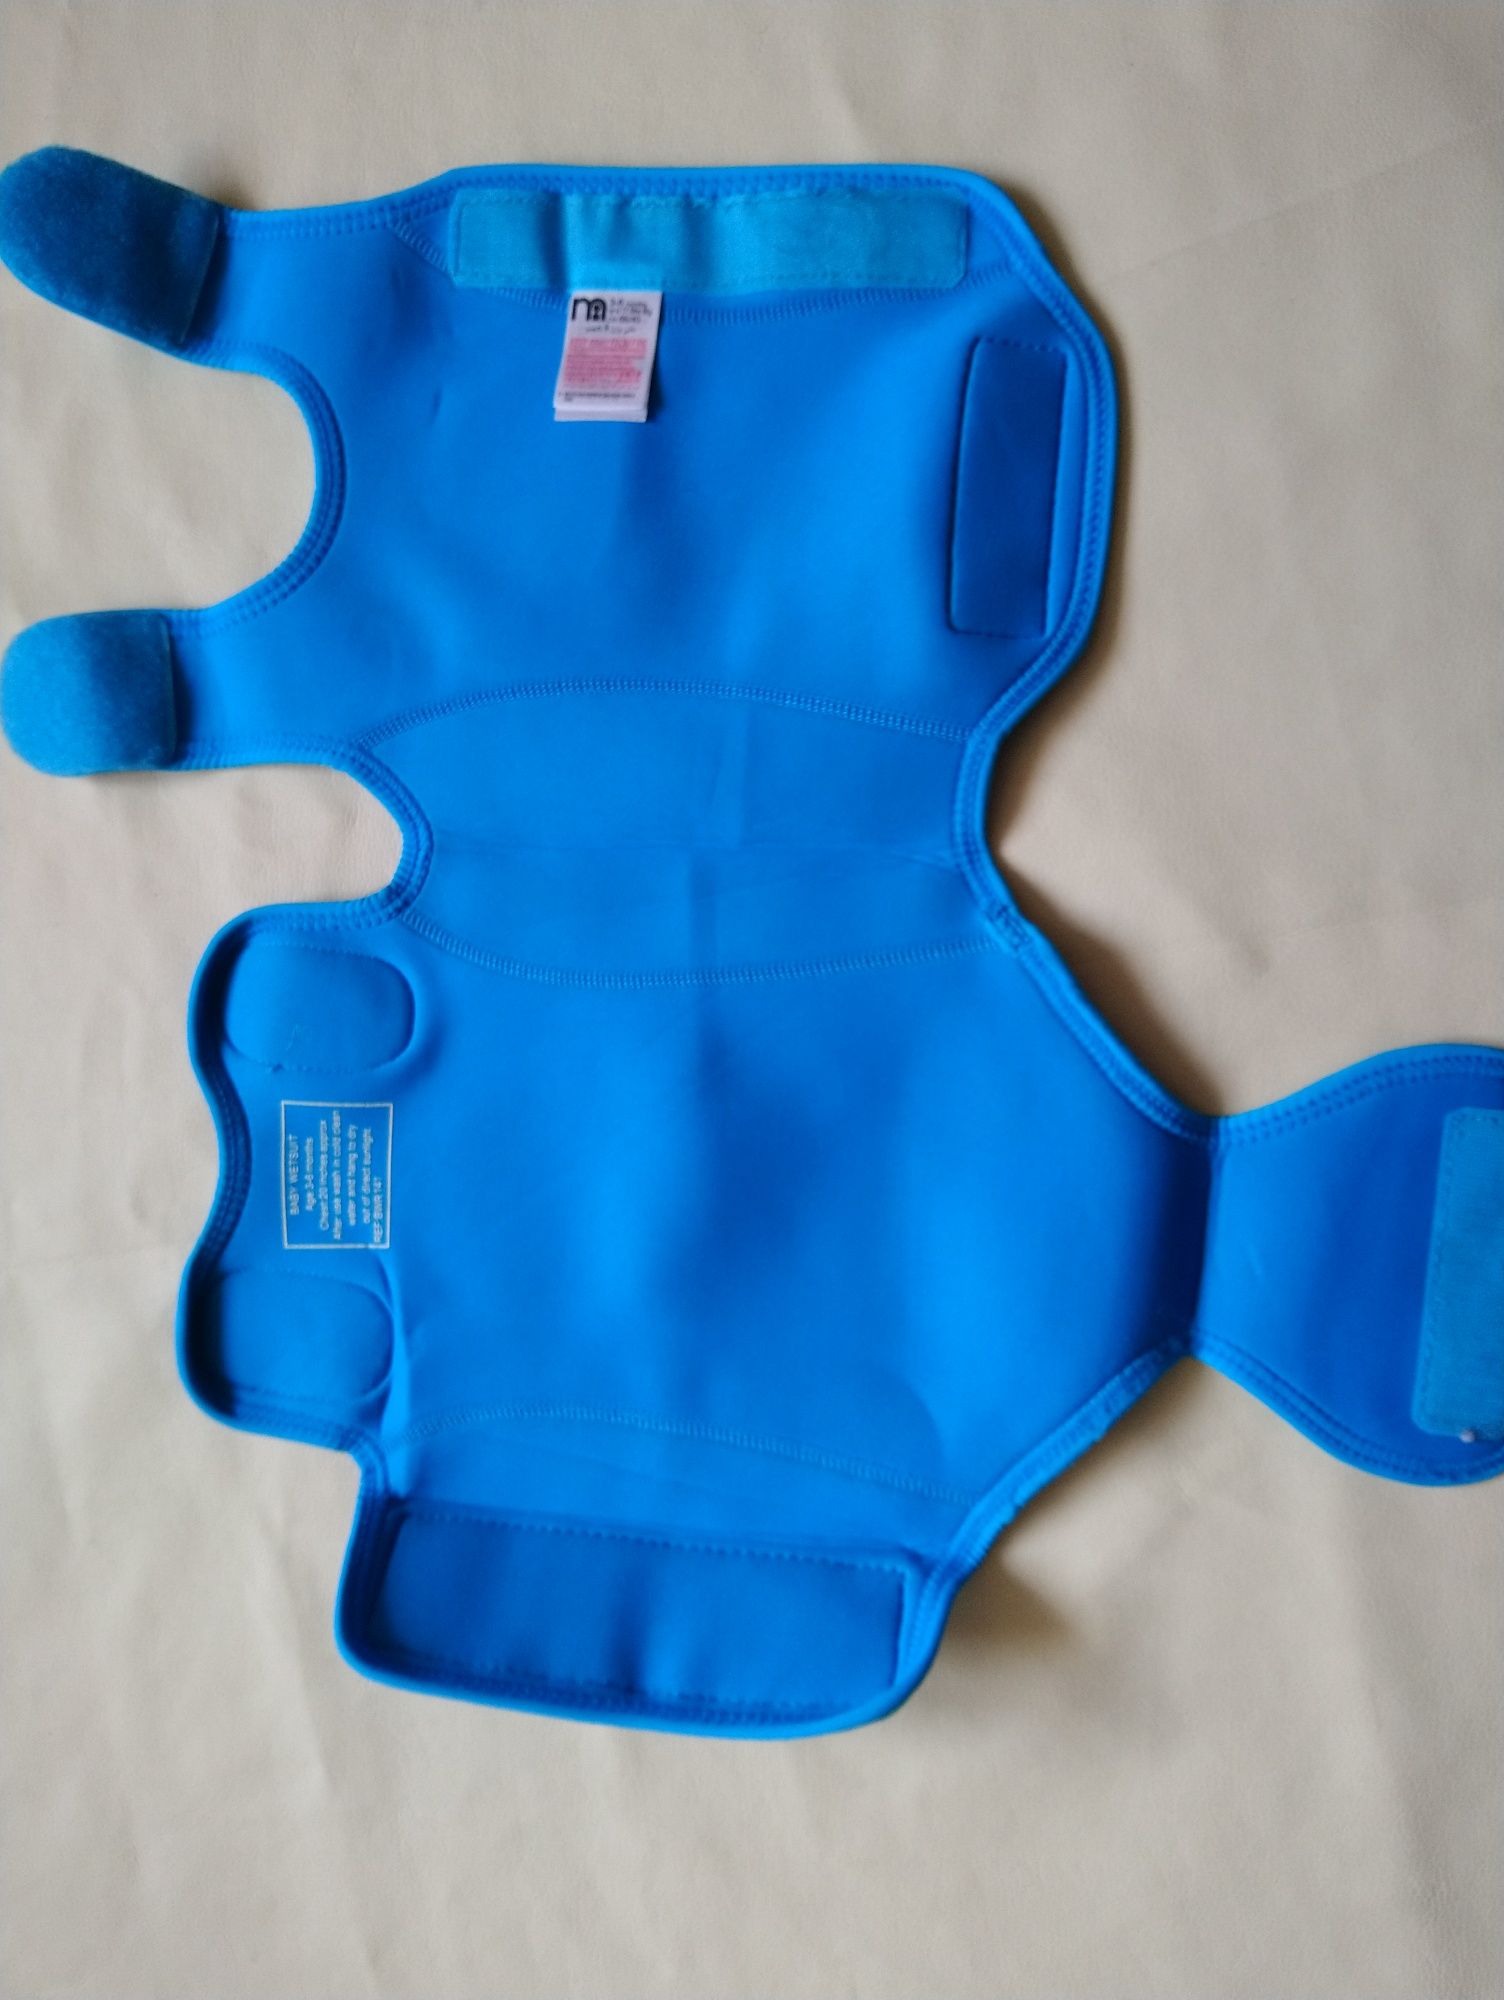 Детский гидрокостюм обертыш Baby Wetsuits на 3-6 месяцев